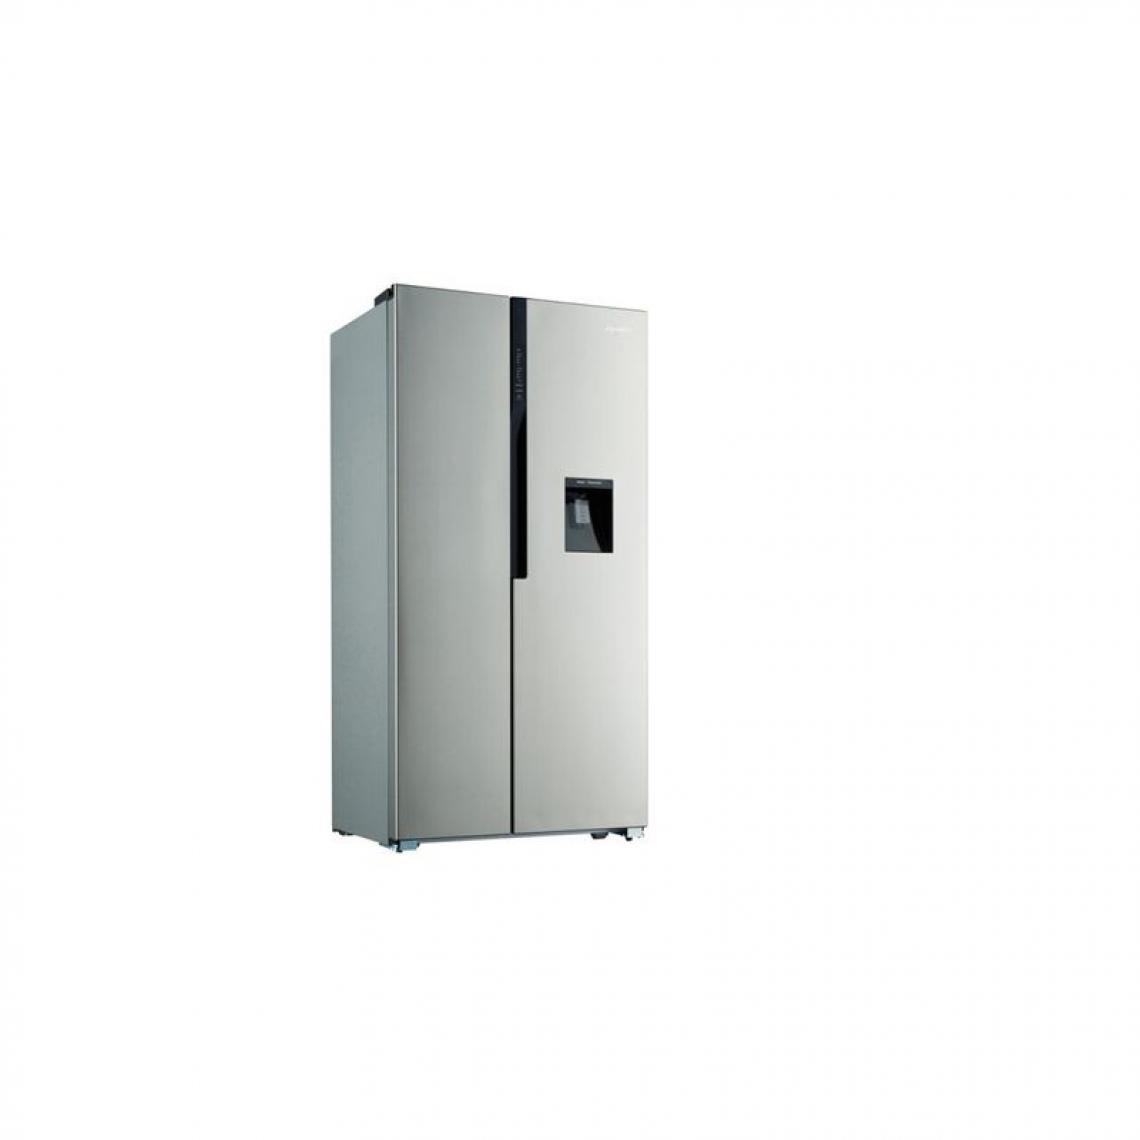 Signature - Réfrigérateur américain SIGNATURE SRUS5001XAQUA 529L Inox - Réfrigérateur américain